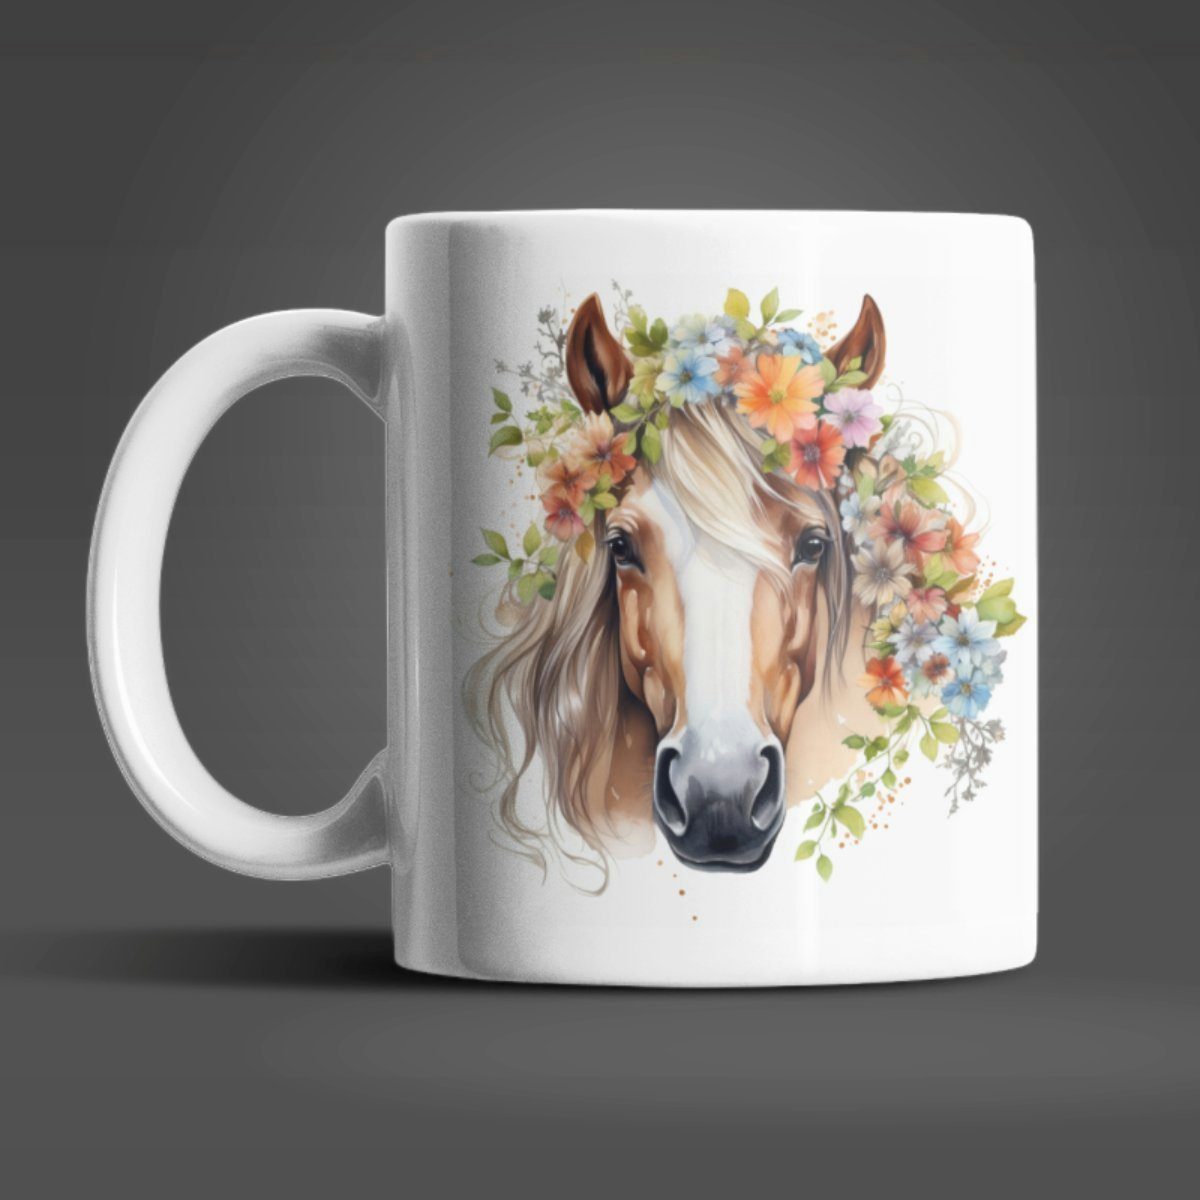 WS-Trend Tasse Süße Pferde Kaffeetasse Teetasse Tasse, Keramik, Geschenkidee Geschenk 330 ml